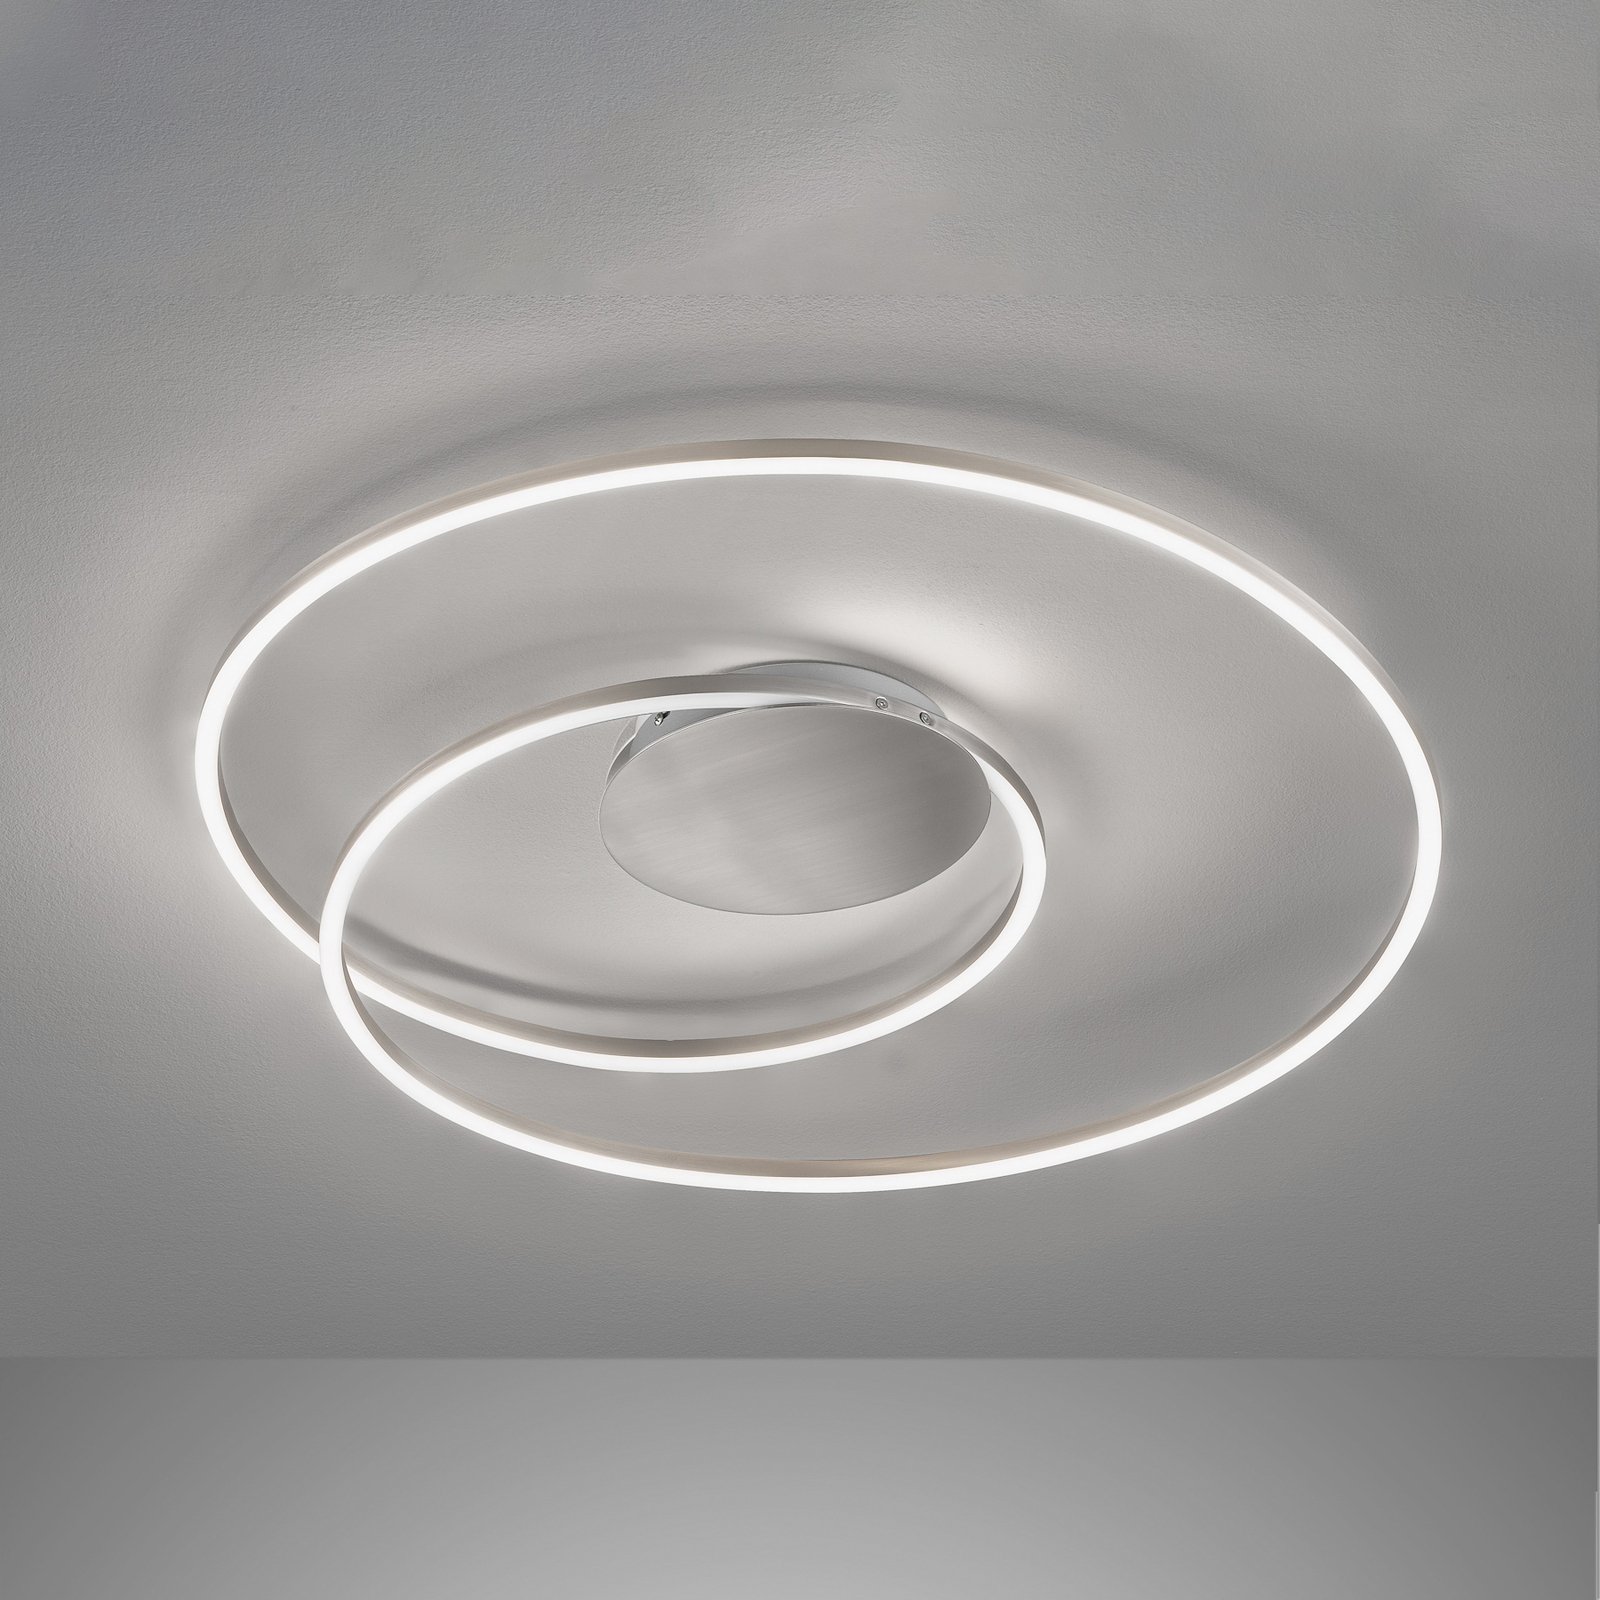 Lampa sufitowa LED Holy, Ø 68cm, nikiel matowy